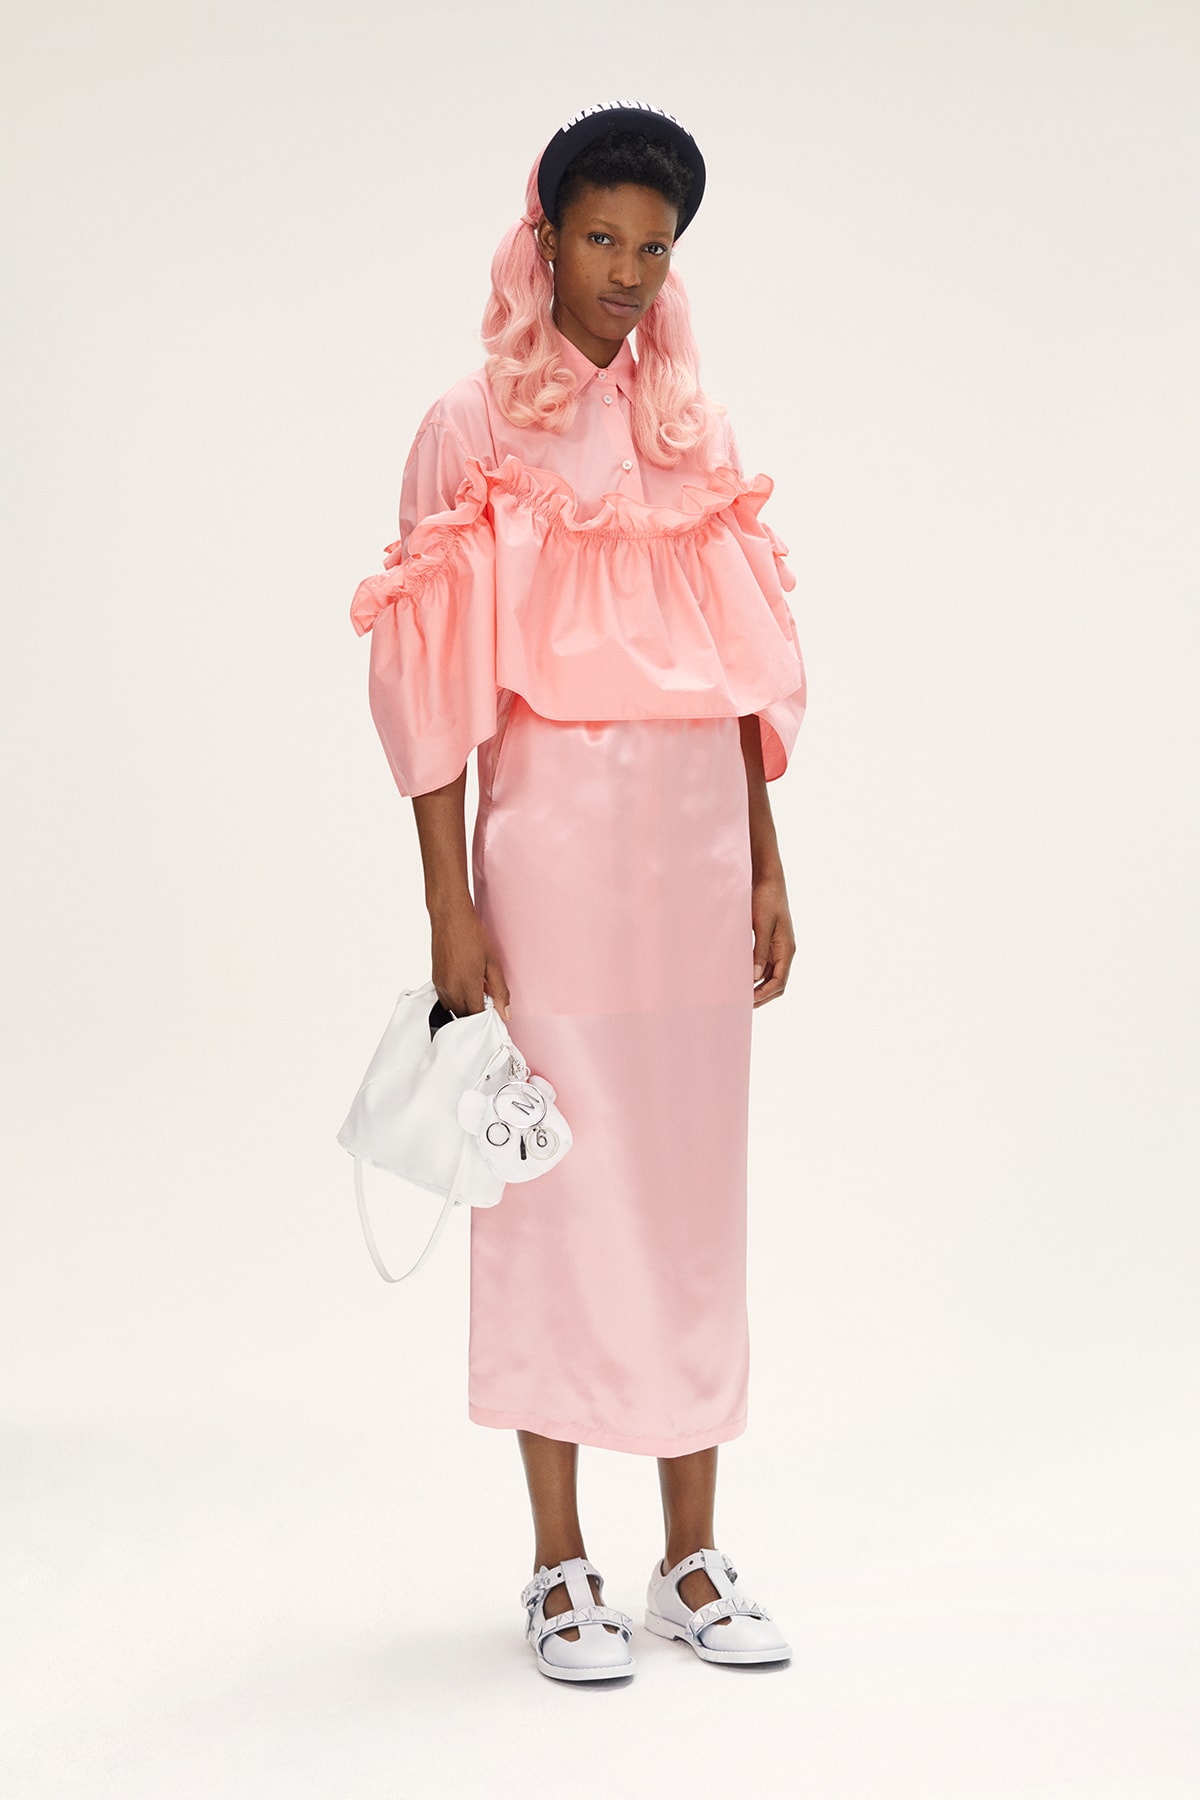 MM6 Maison Margiela Spring/Summer 2020 Collection Lookbook Ruffle Top Skirt Pink